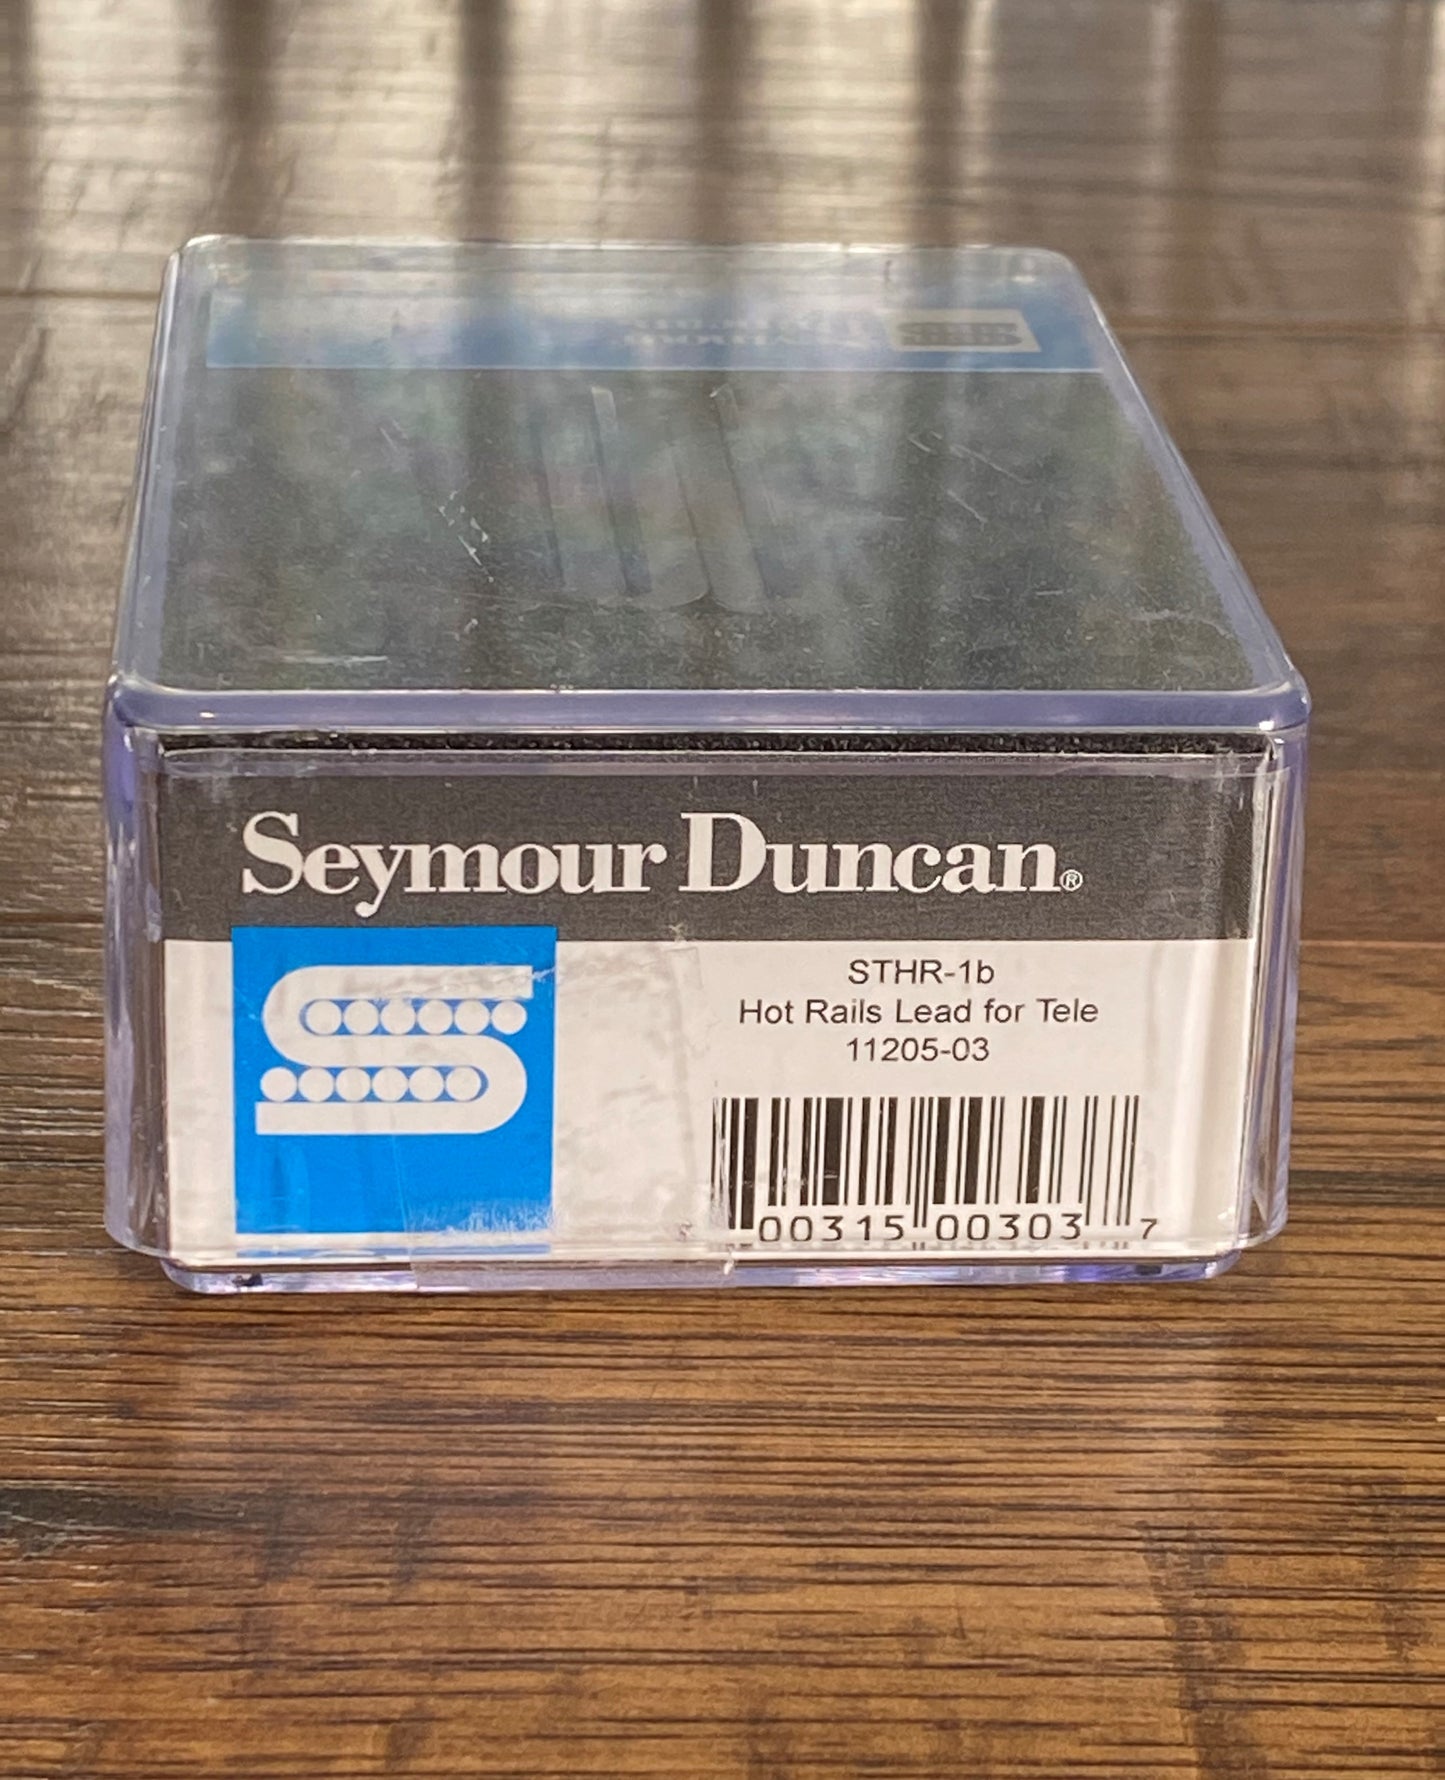 Seymour Duncan STHR-1b Hot Rails Lead Tele Guitar Pickup Bridge Black